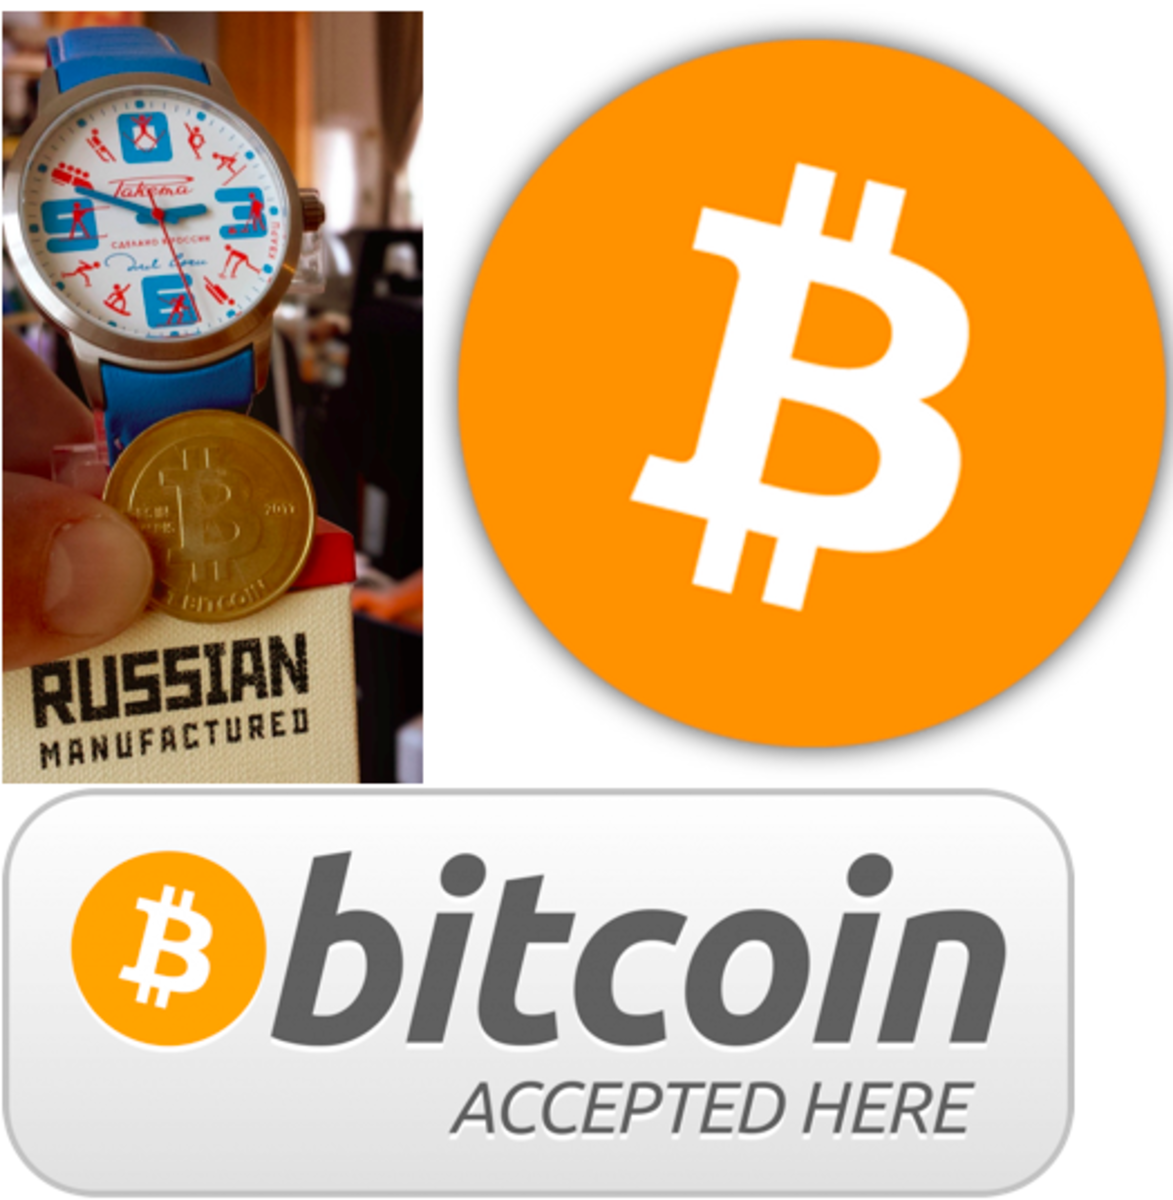 Op-ed - 300 Year Old Russian Watch Factory Raketa Accepts Bitcoins